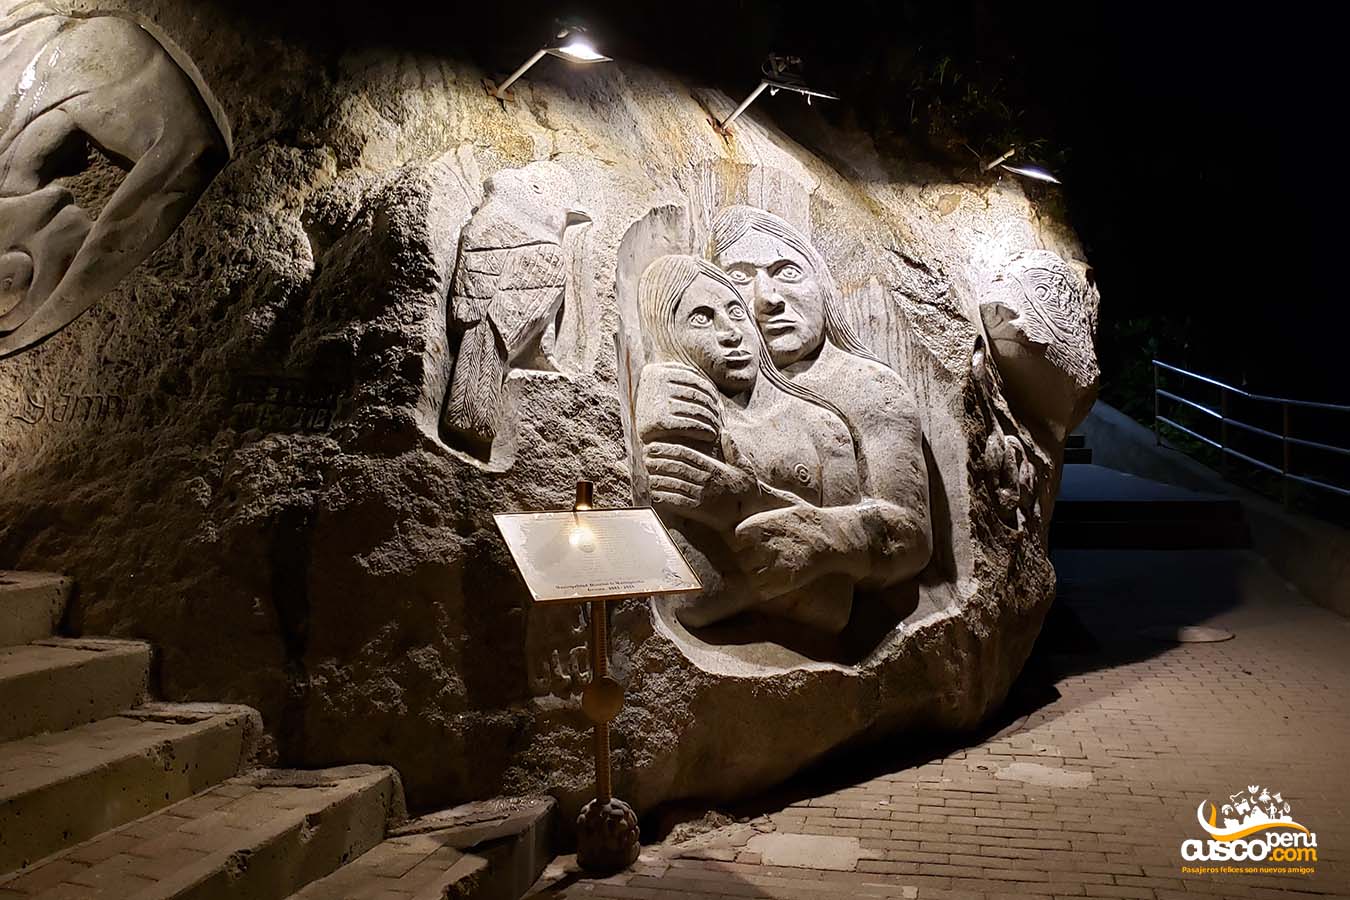 Sculpture carved in the town of Aguas Calientes. Source: CuscoPeru.com